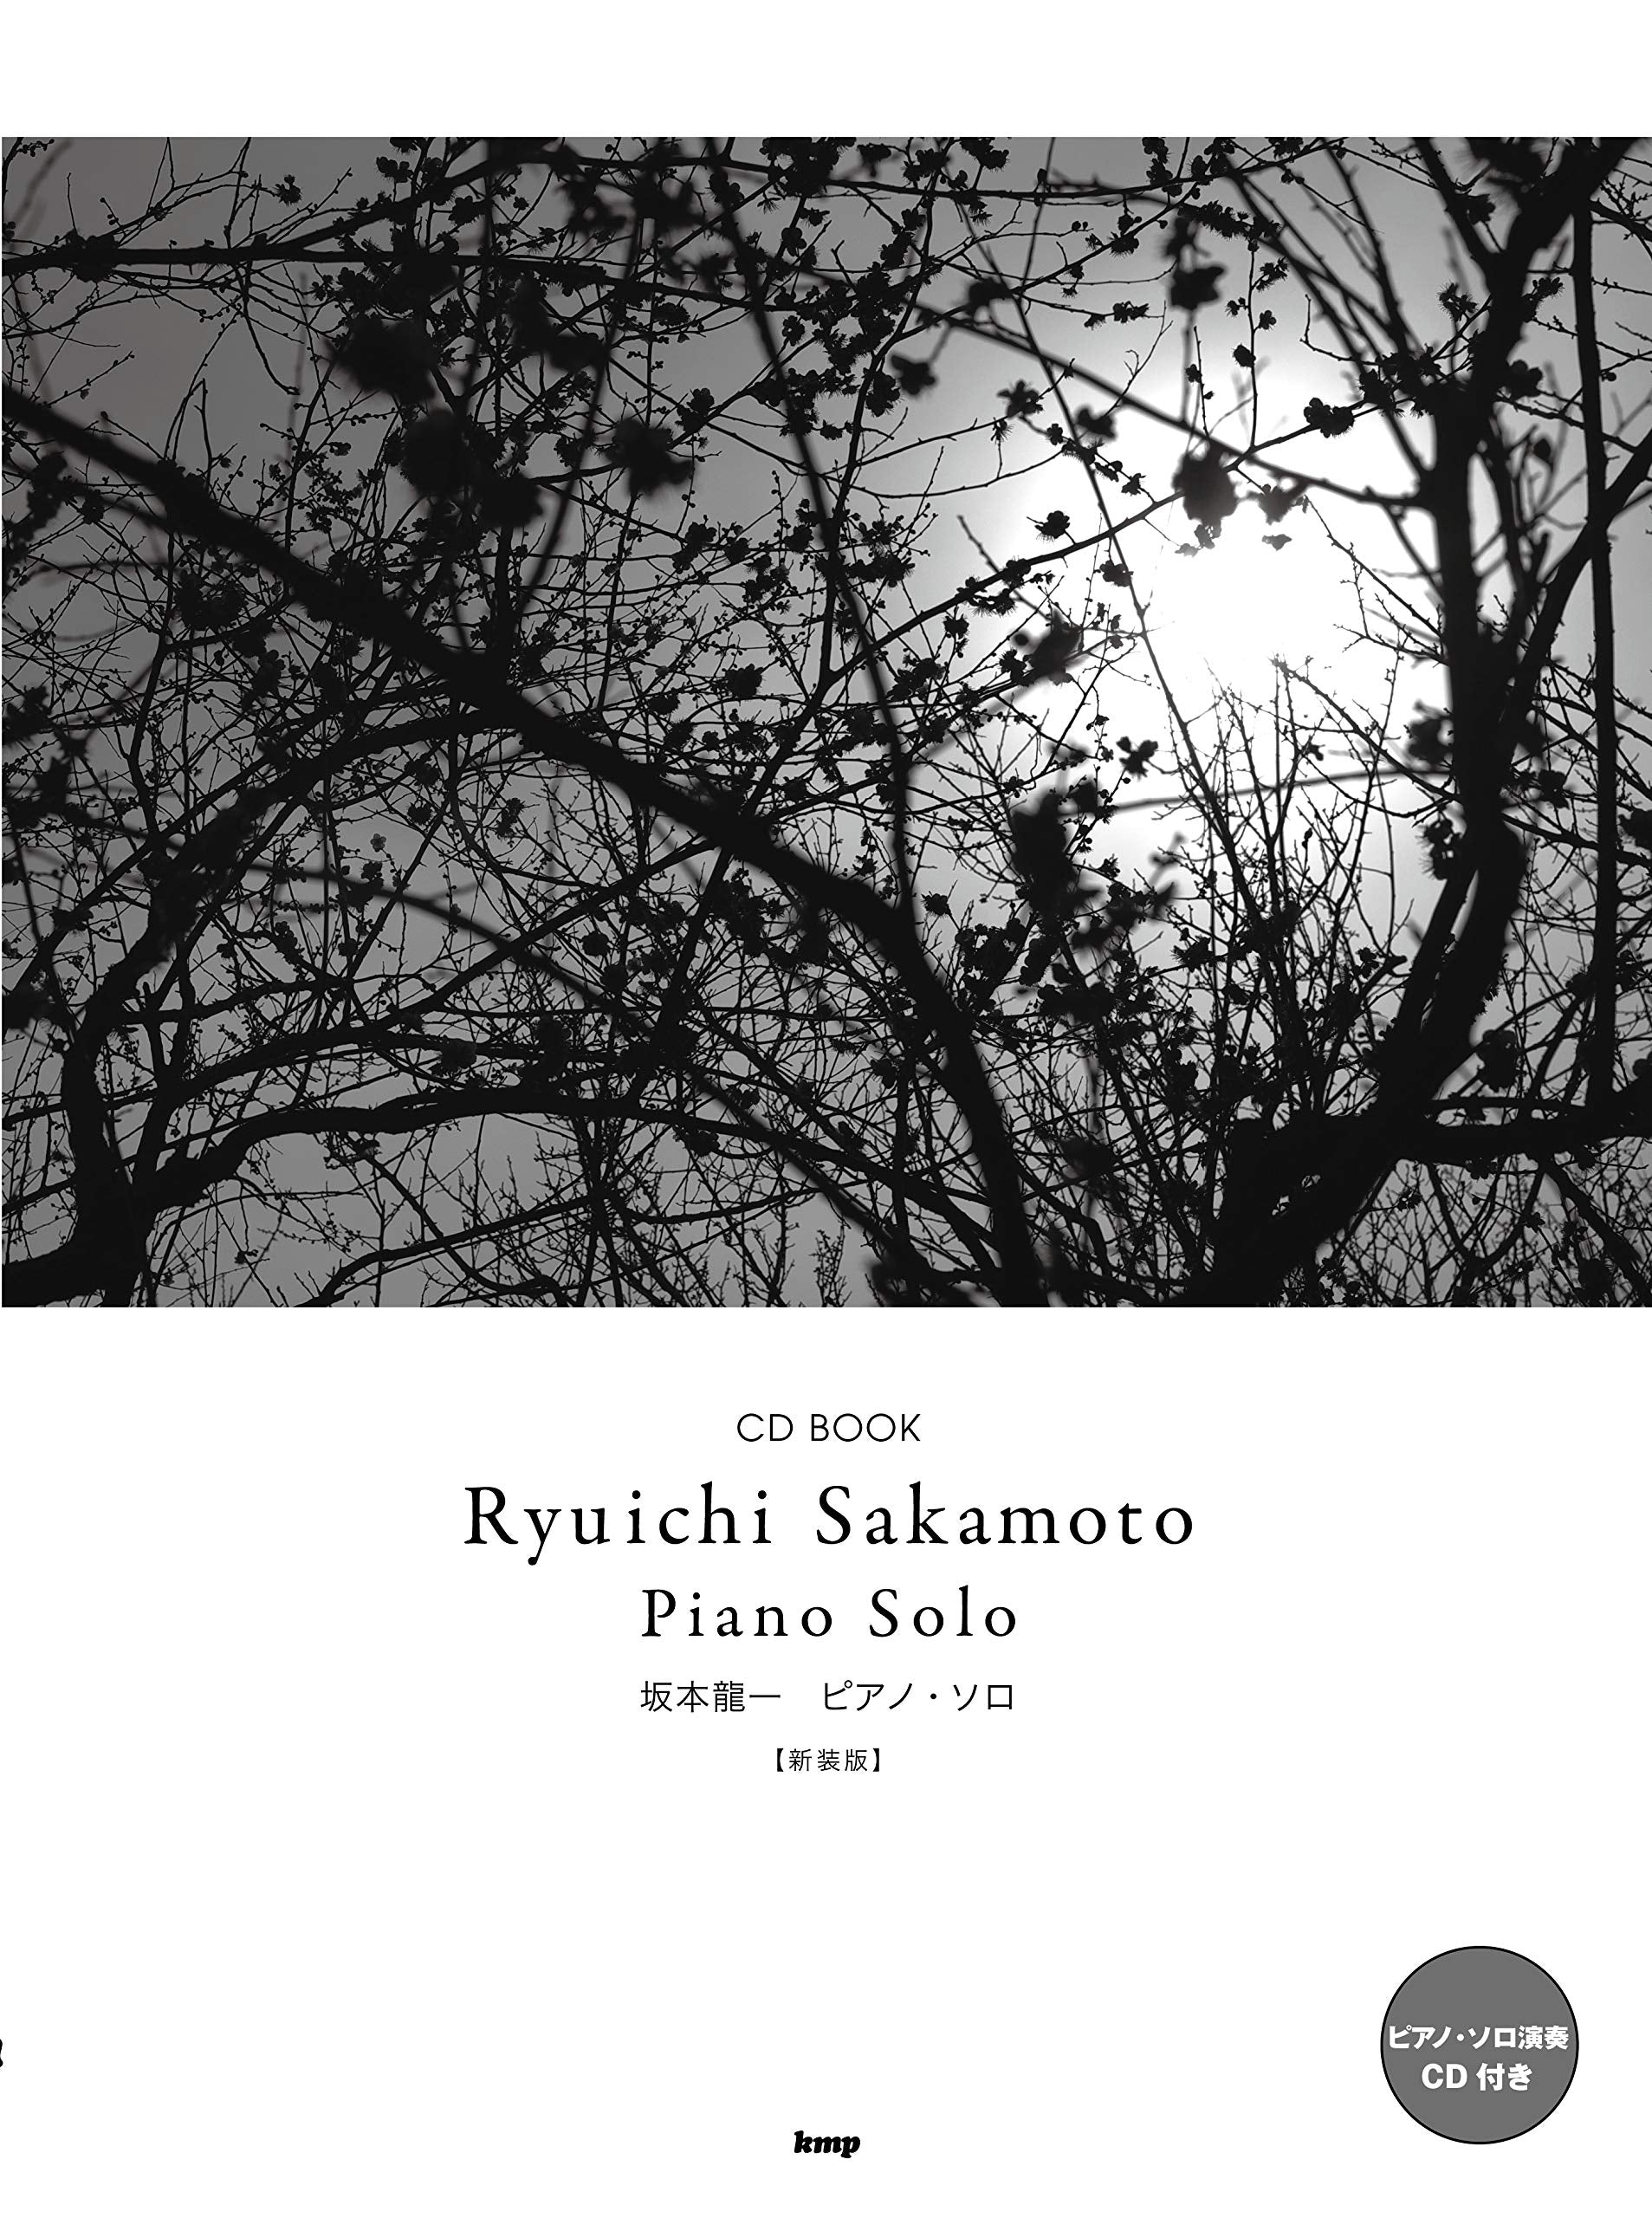 CD BOOK Ryuichi Sakamoto for Advanced Piano Solo w/CD